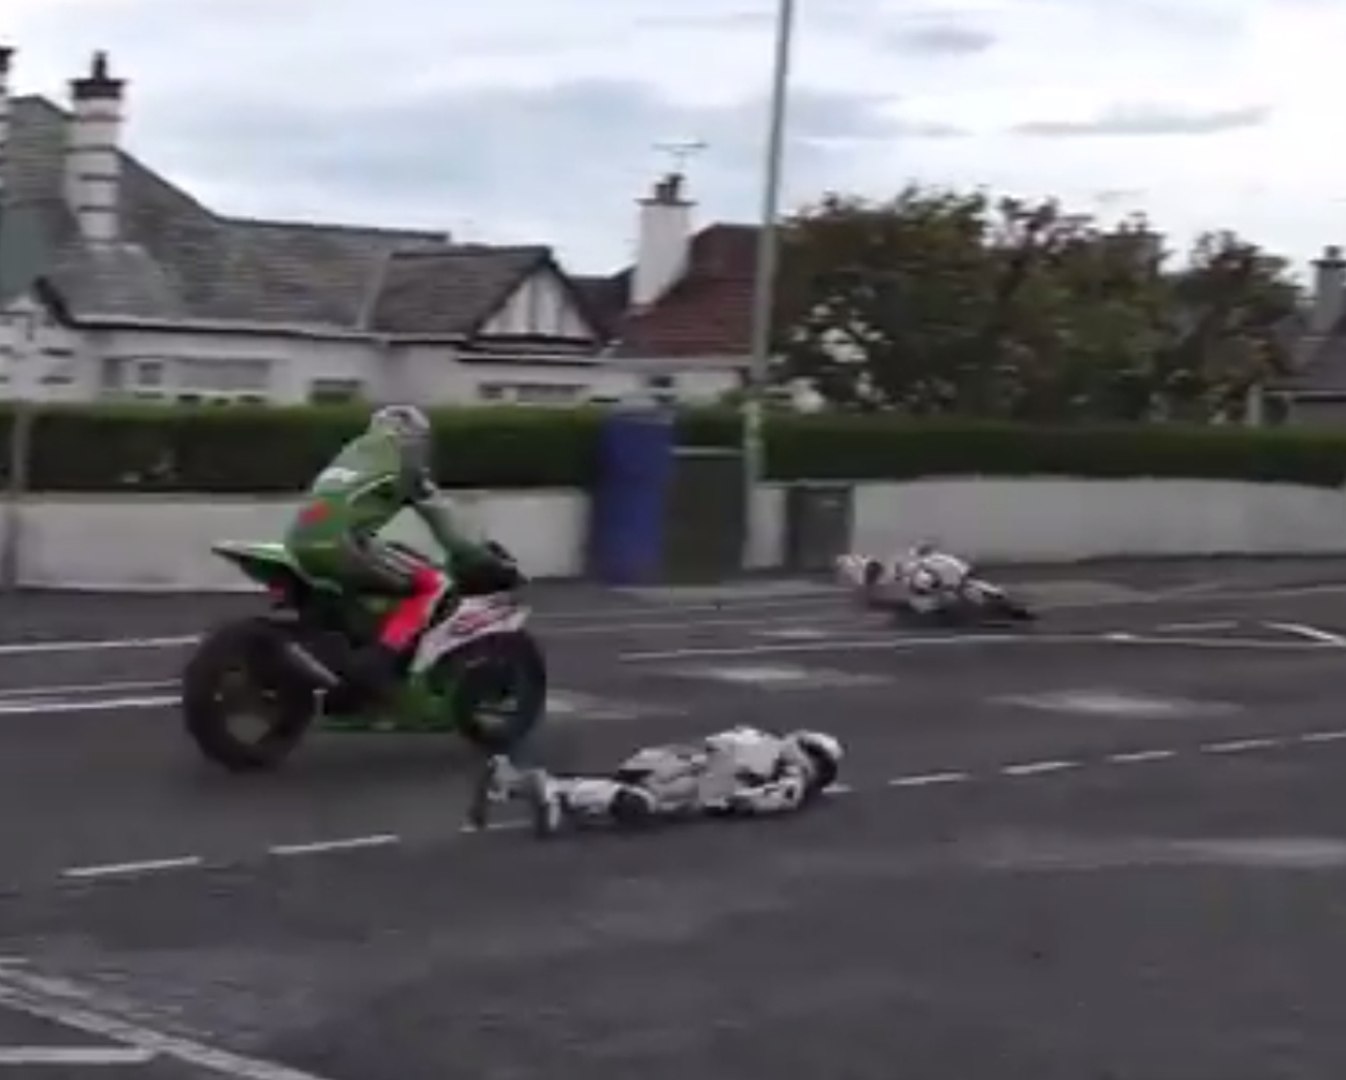 Crash violent de Simon Andrews en Moto - Vidéo Dailymotion